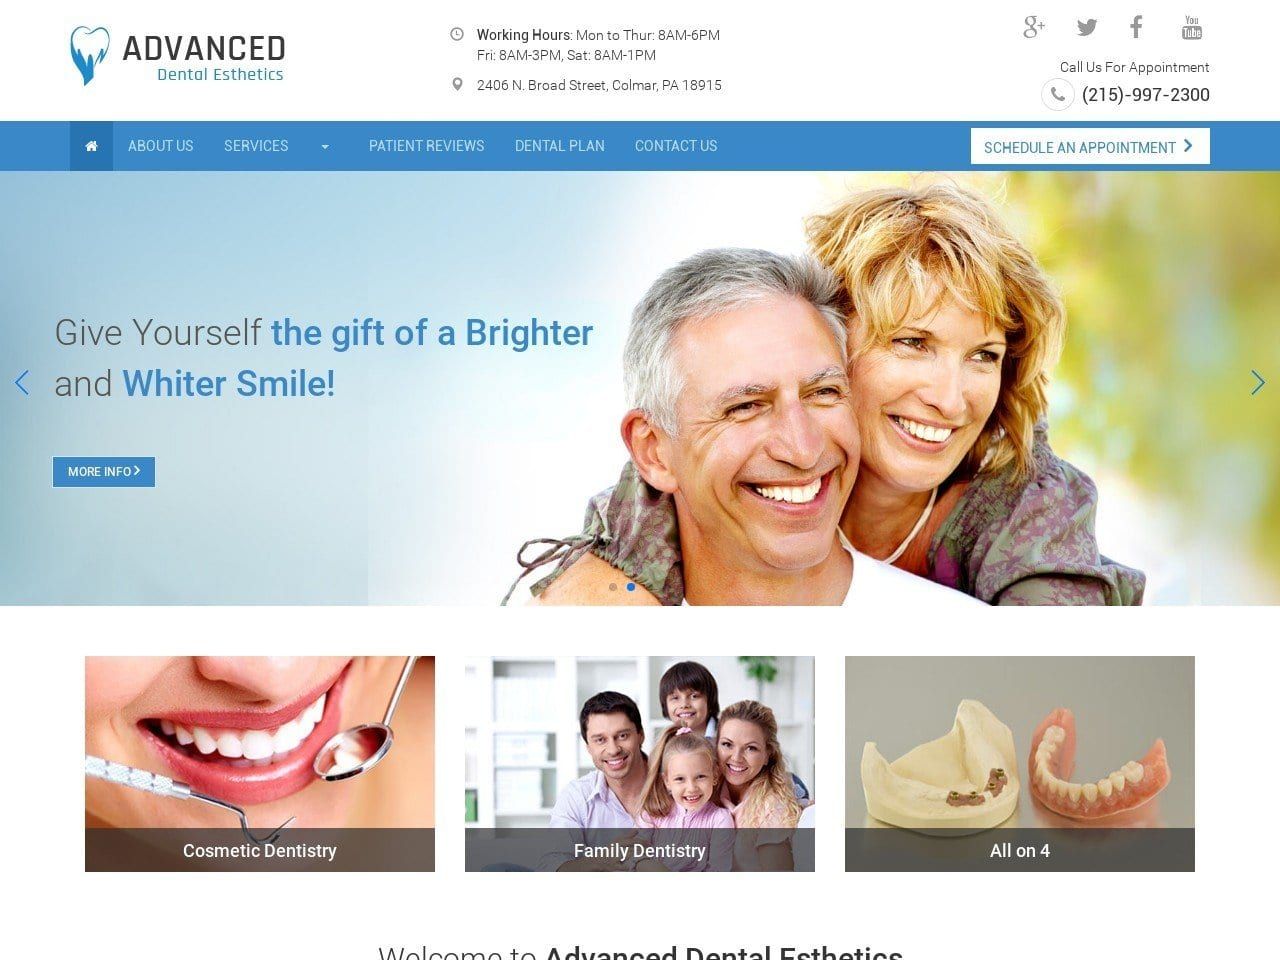 Advanced Dental Esthetics Website Screenshot from pafamilydentist.com